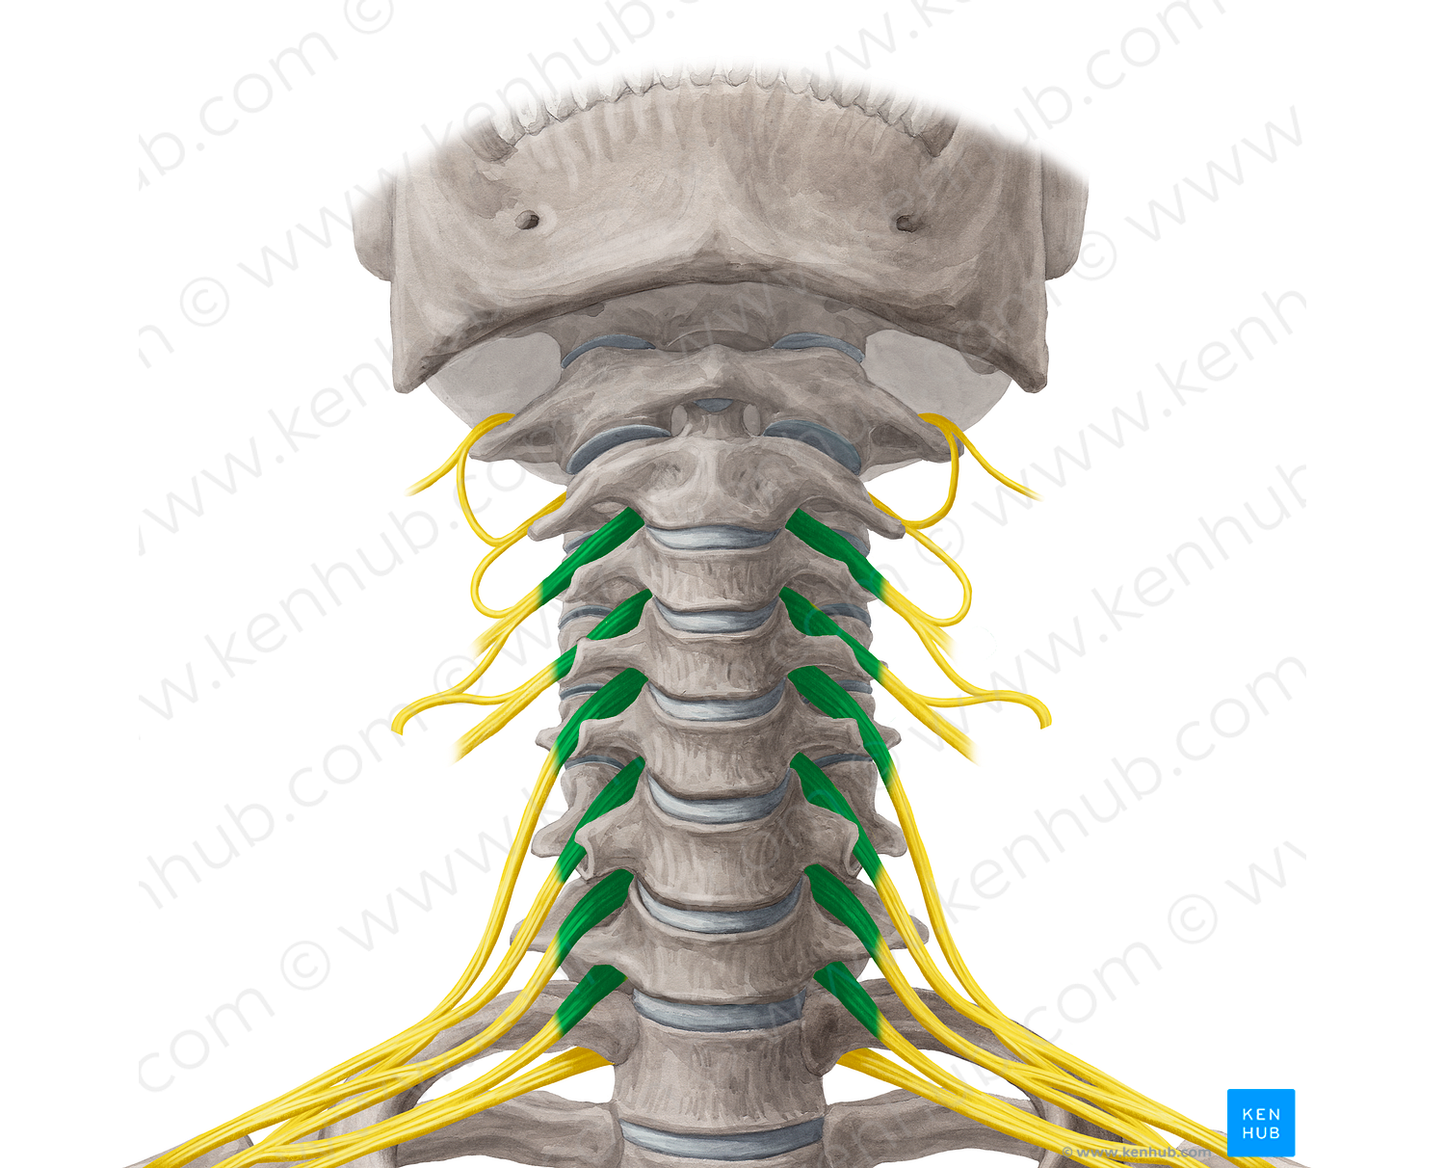 Anterior rami of spinal nerves C3-C8 (#18528)